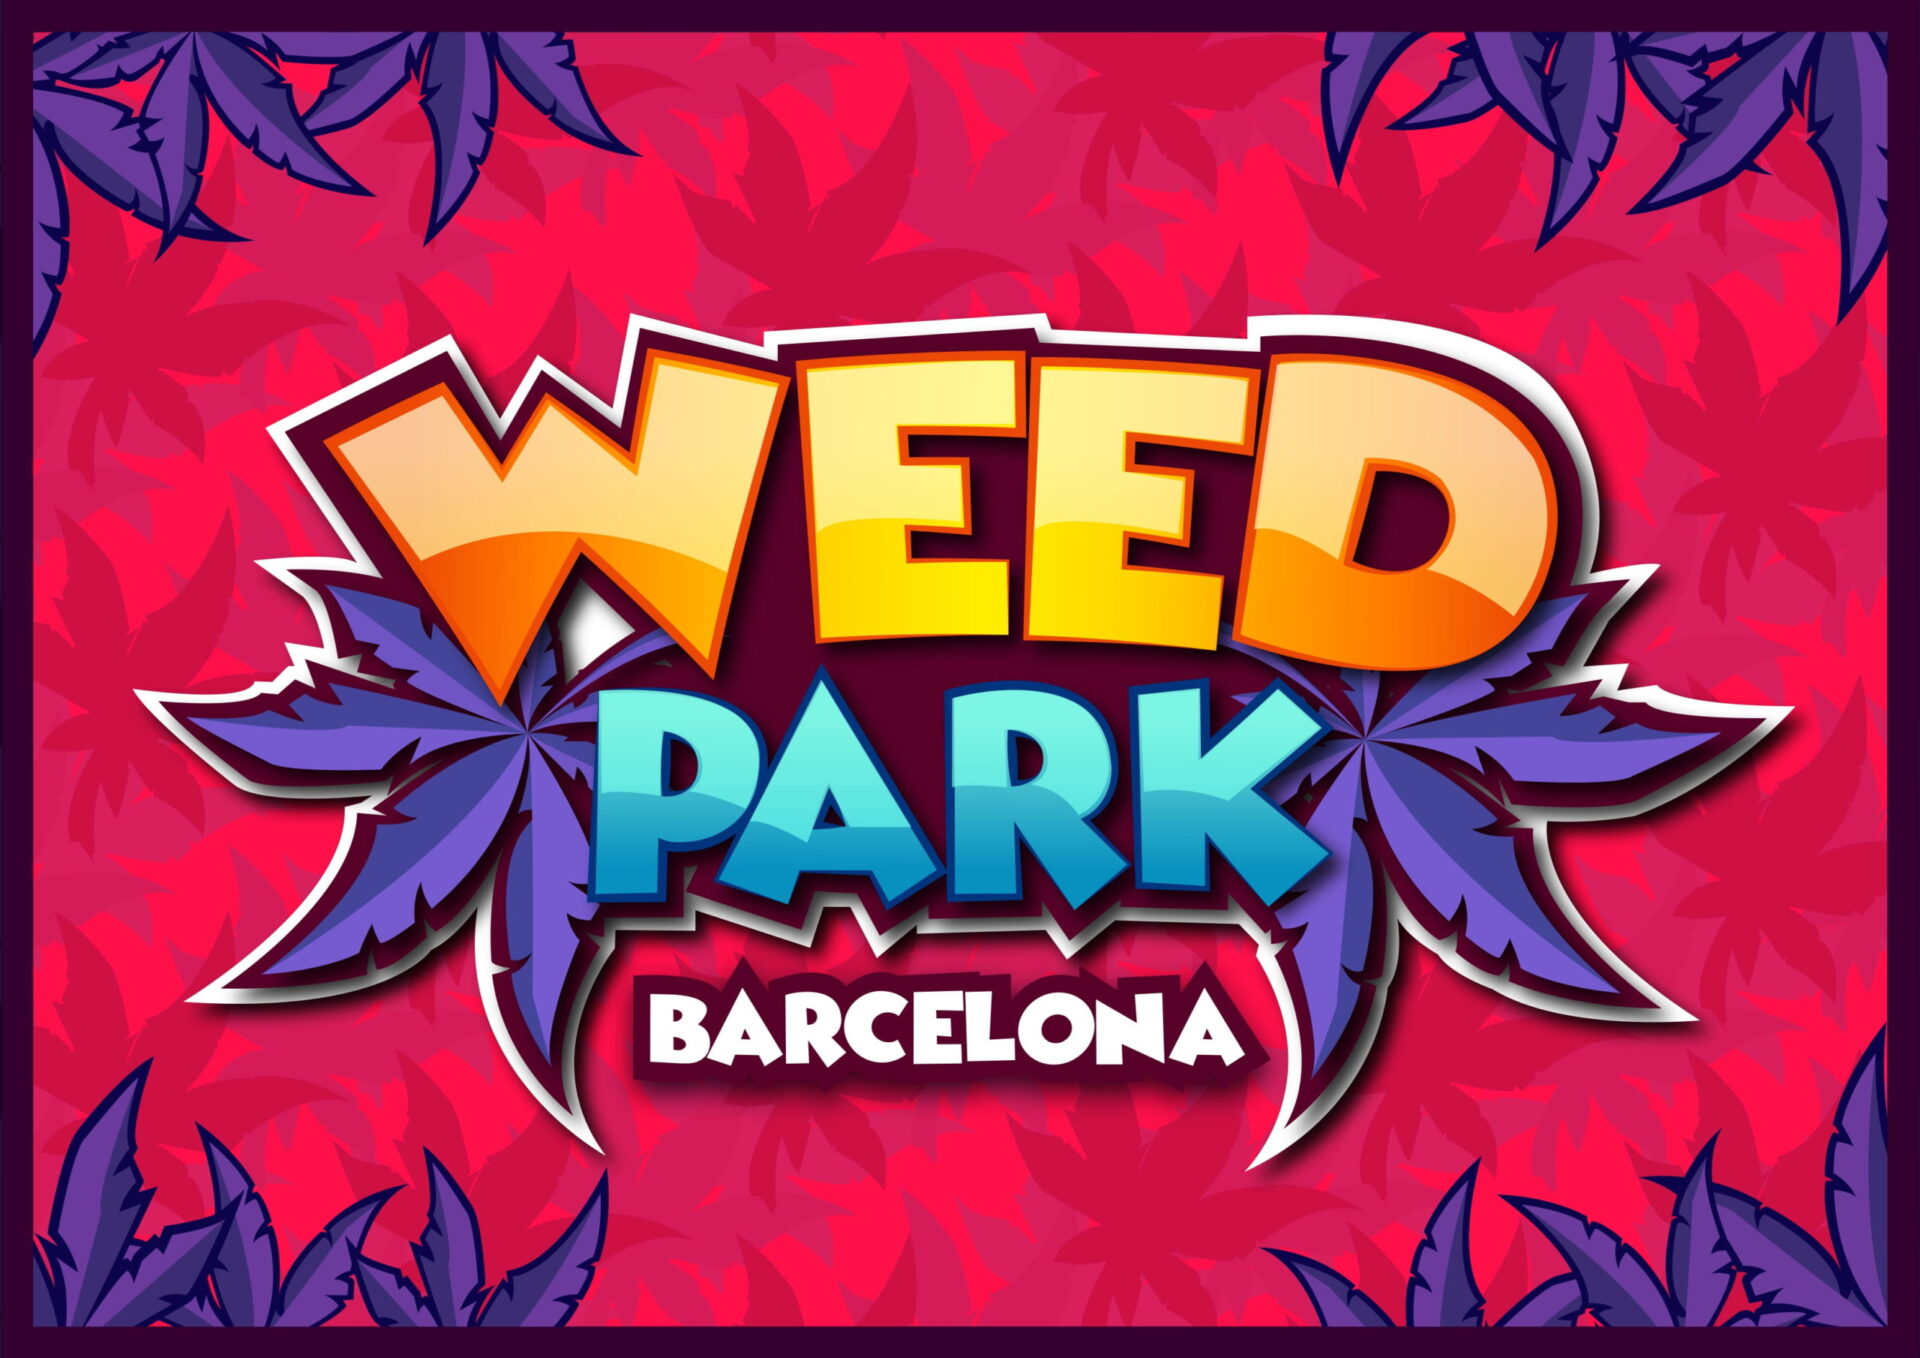 Barcelona Weed Park 2